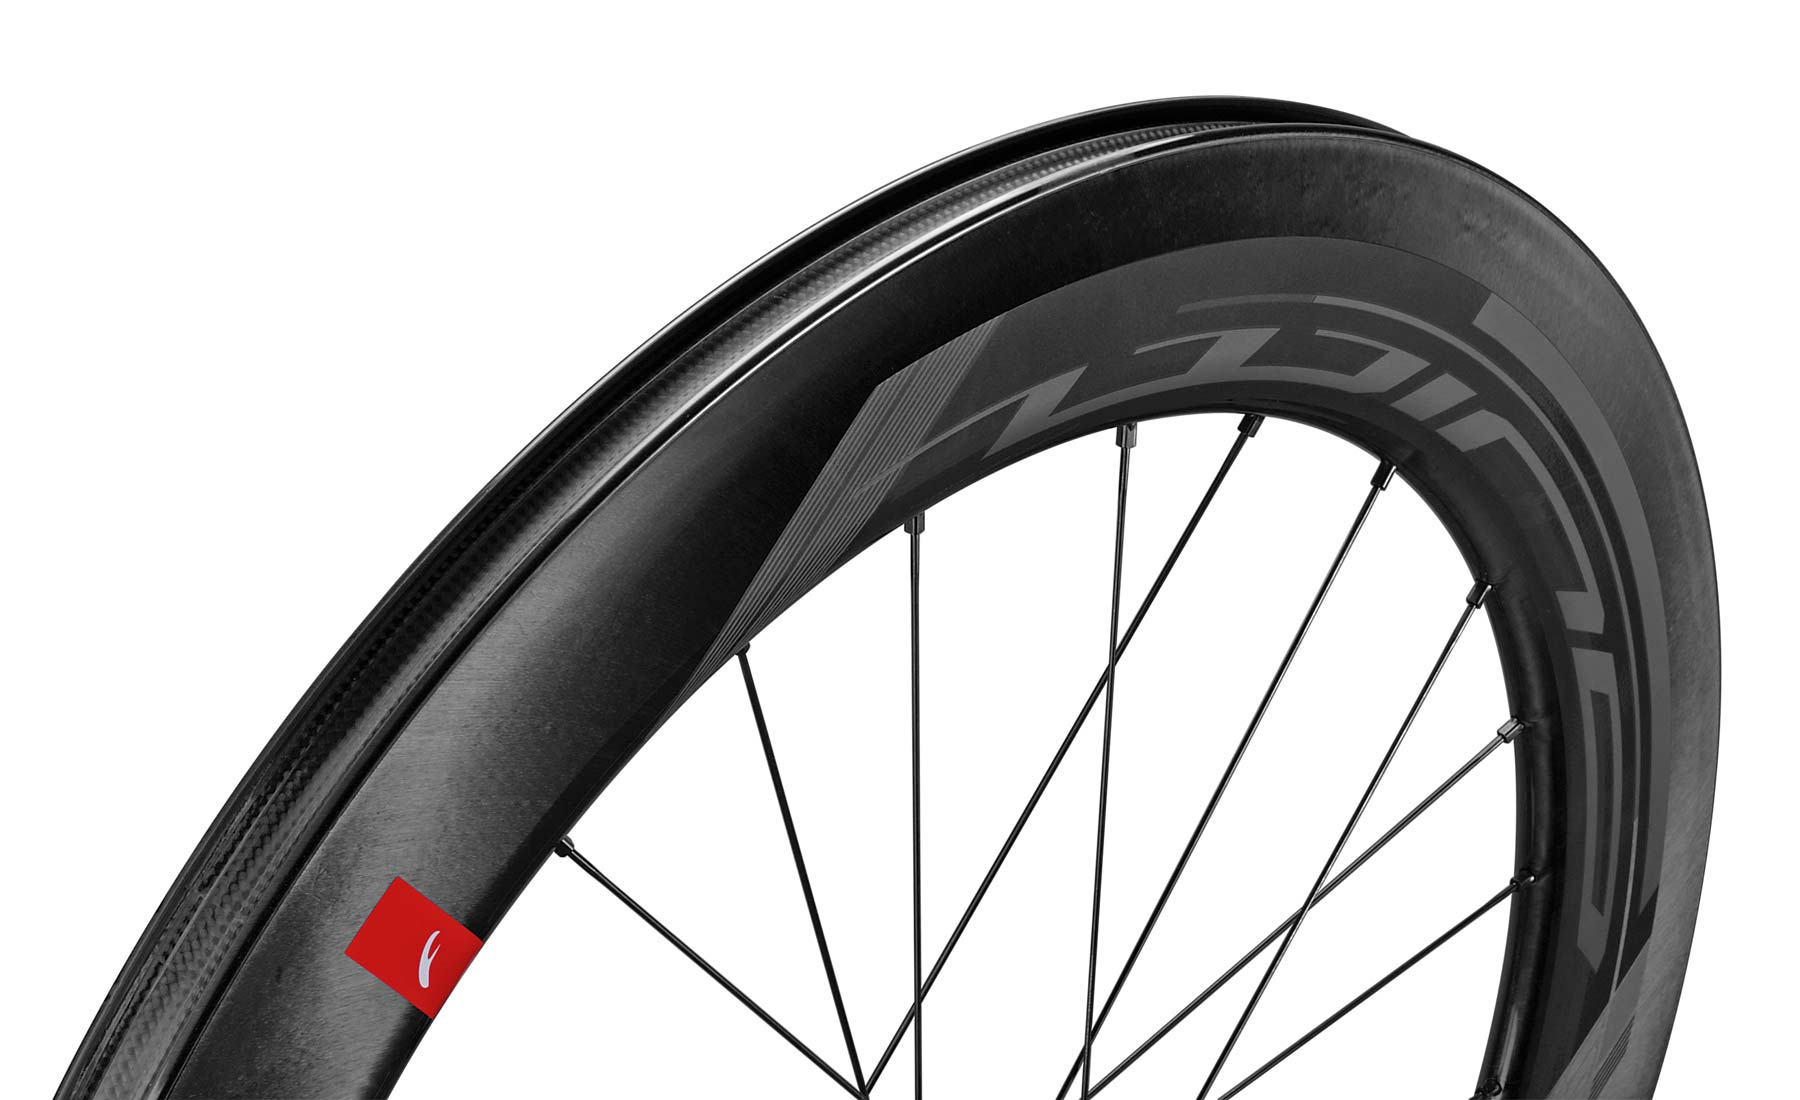 Fulcrum-Wind-75-DB-deep-aero-carbon-triathlon-wheels_rim-close-up-detail.jpg